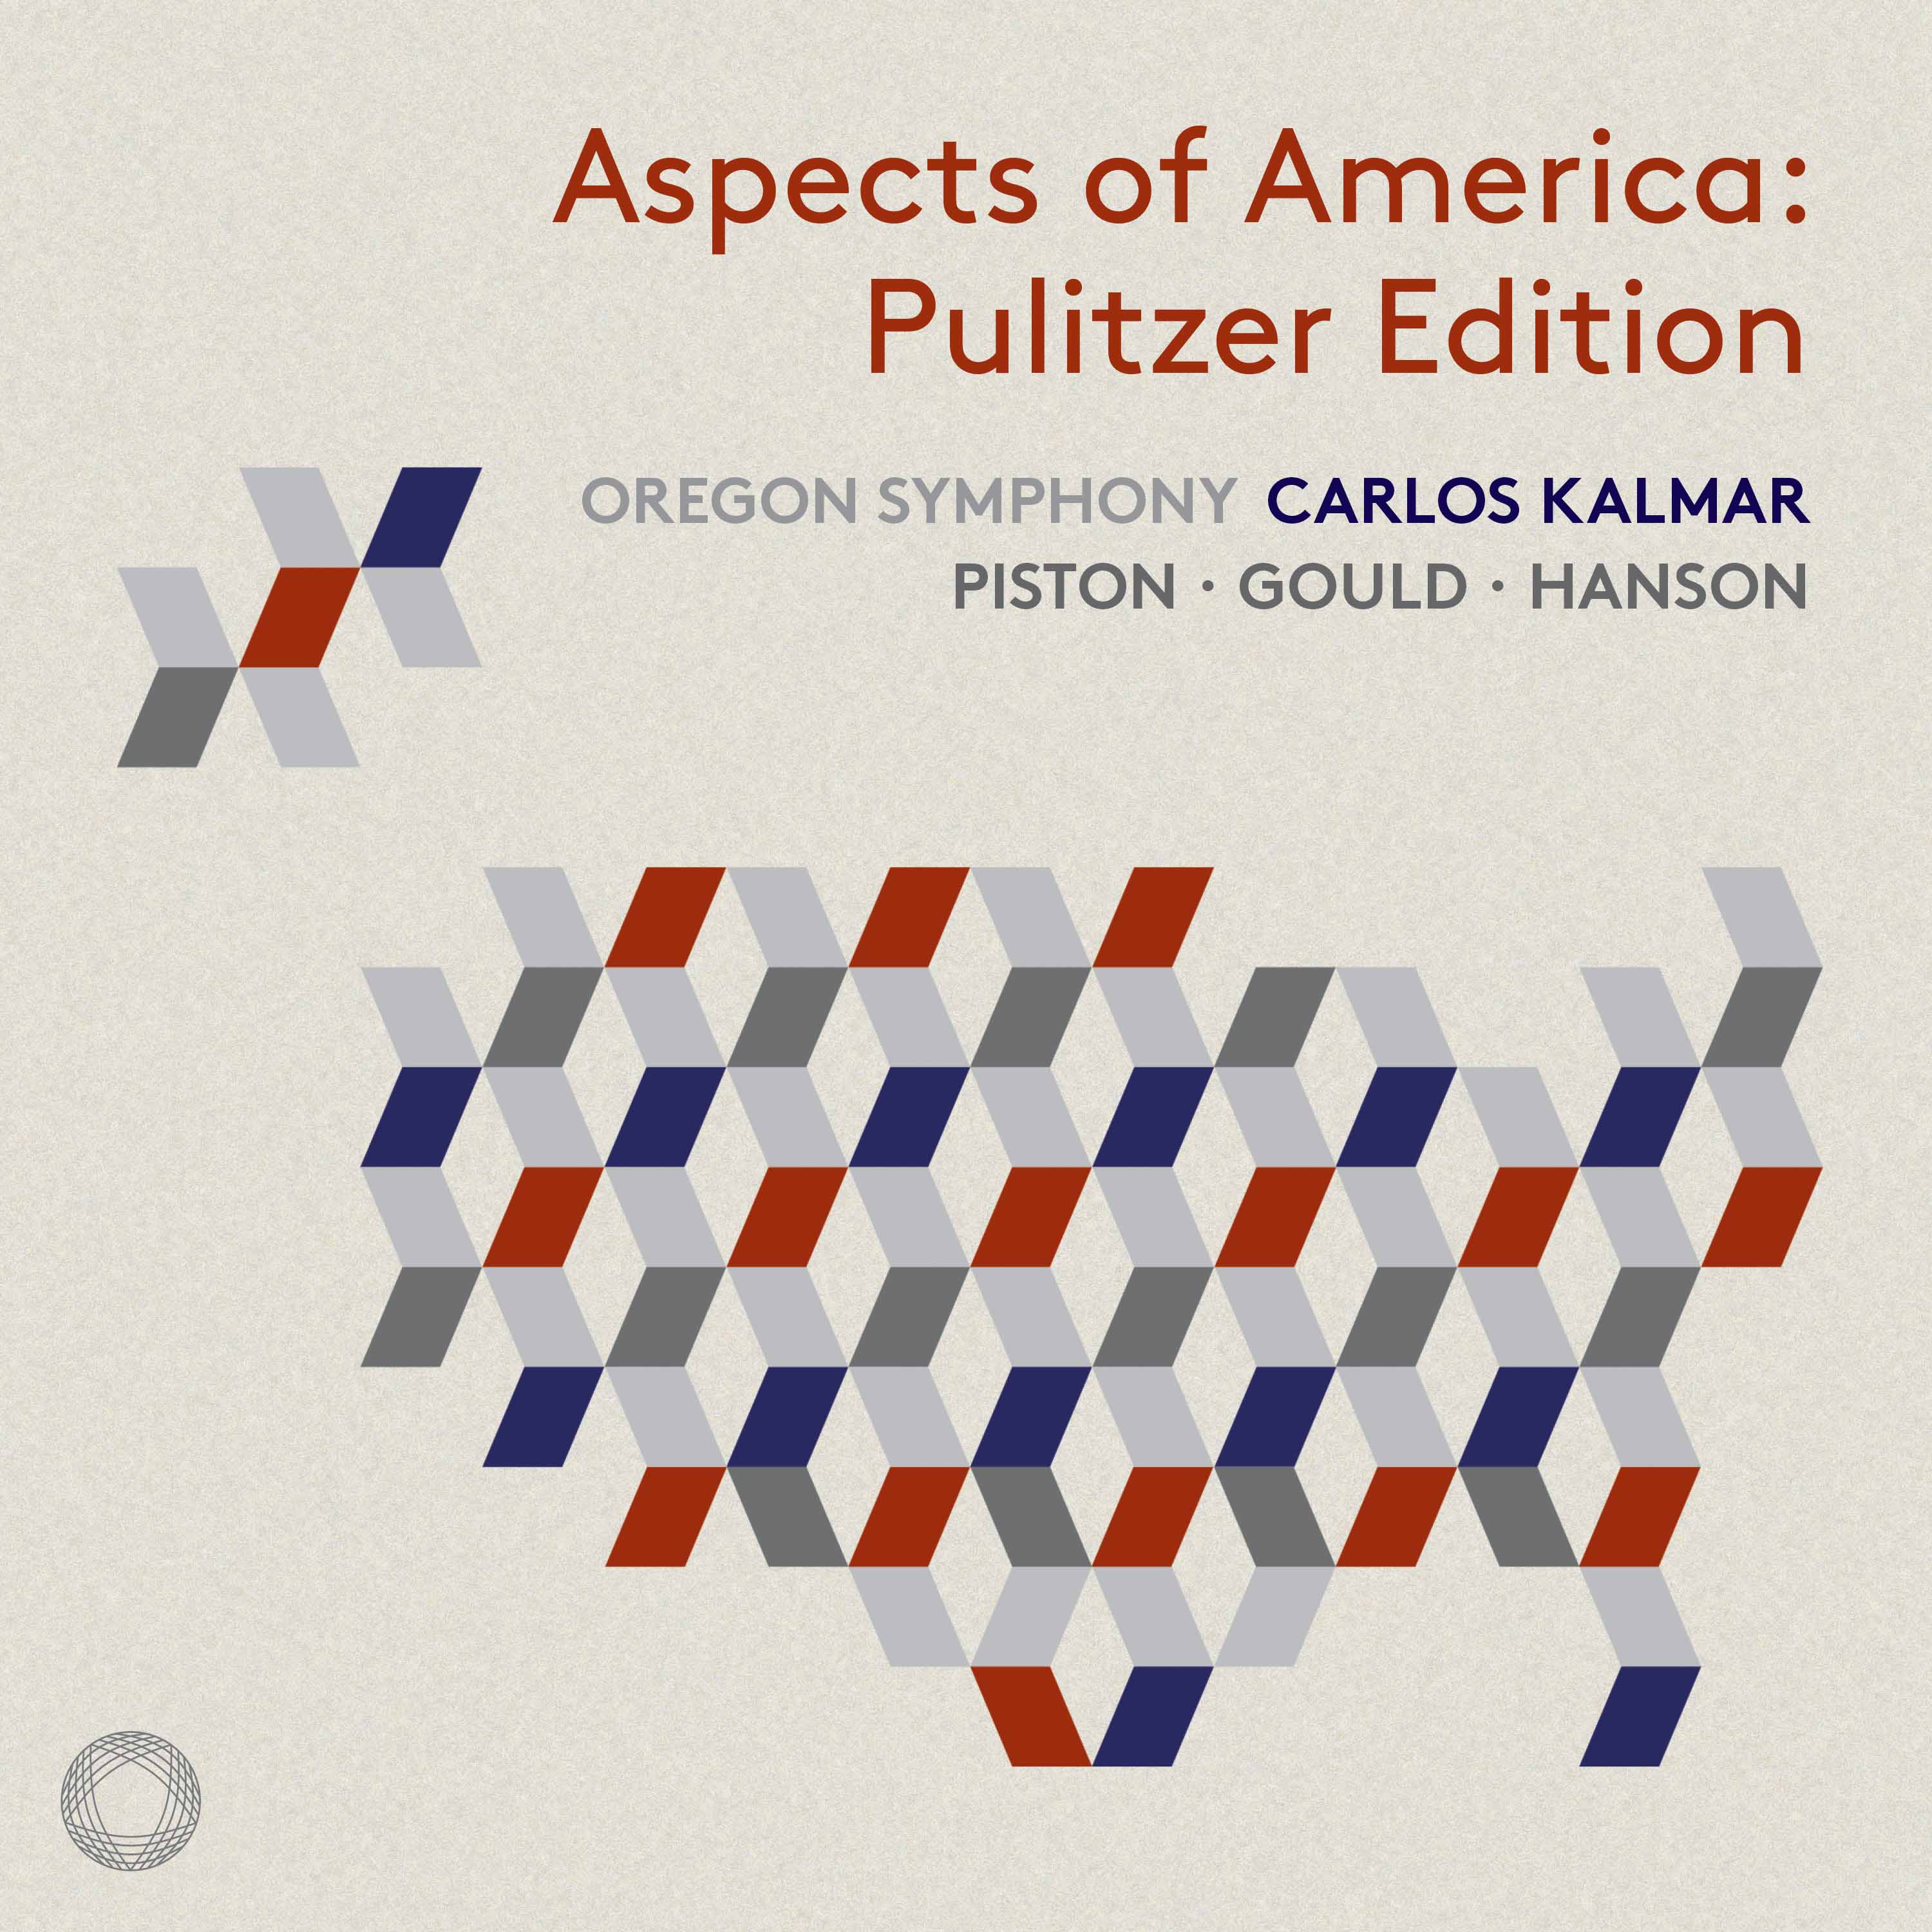 Carlos Kalmar 미국의 양상 - 퓰리처상 수상 작품 에디션 (Aspects of America - The Pulitzer Edition)